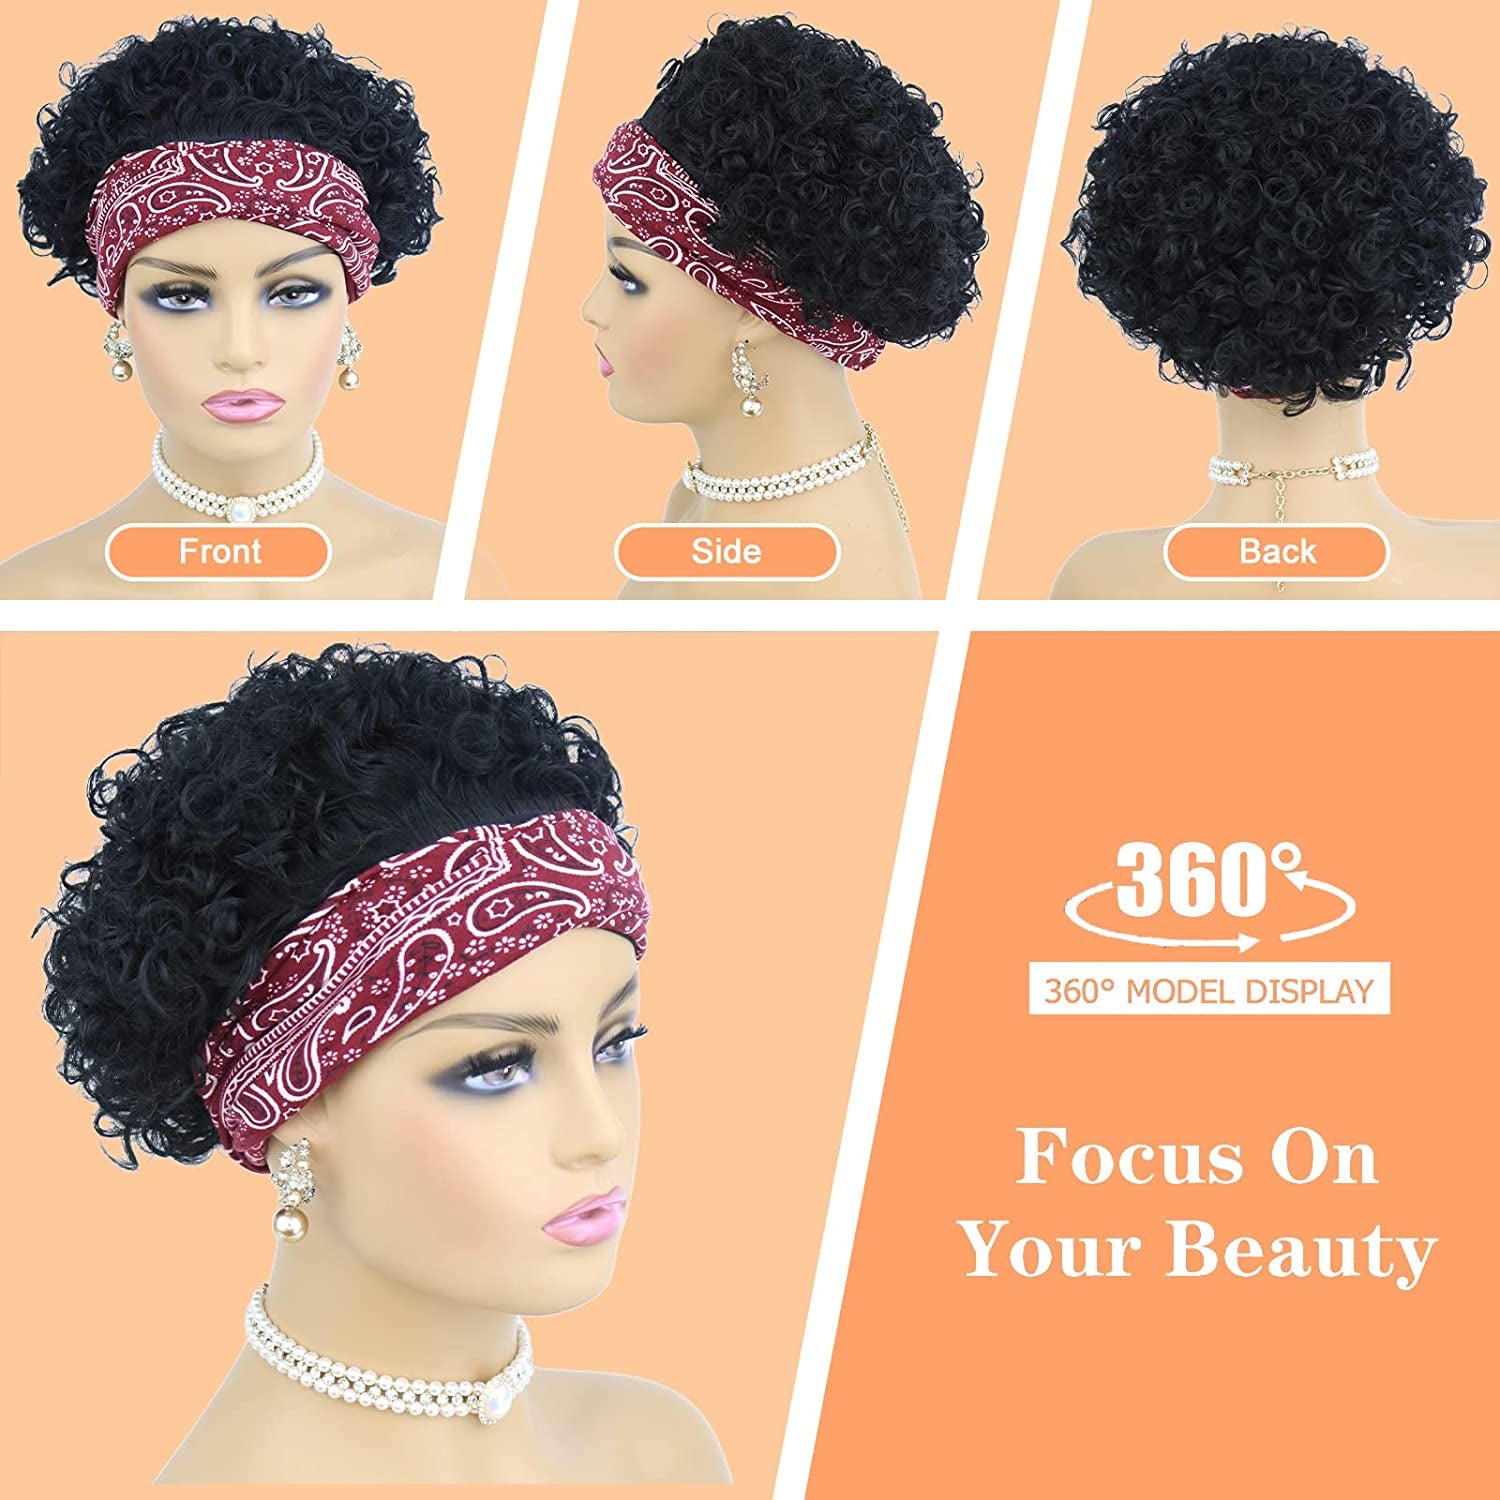 Short Curly Headband Wig Human Hair Wigs for Women Pixie Cut Kinky Curly Bob Glueless Half Wigs 150% Density Natural Black 6 Inch